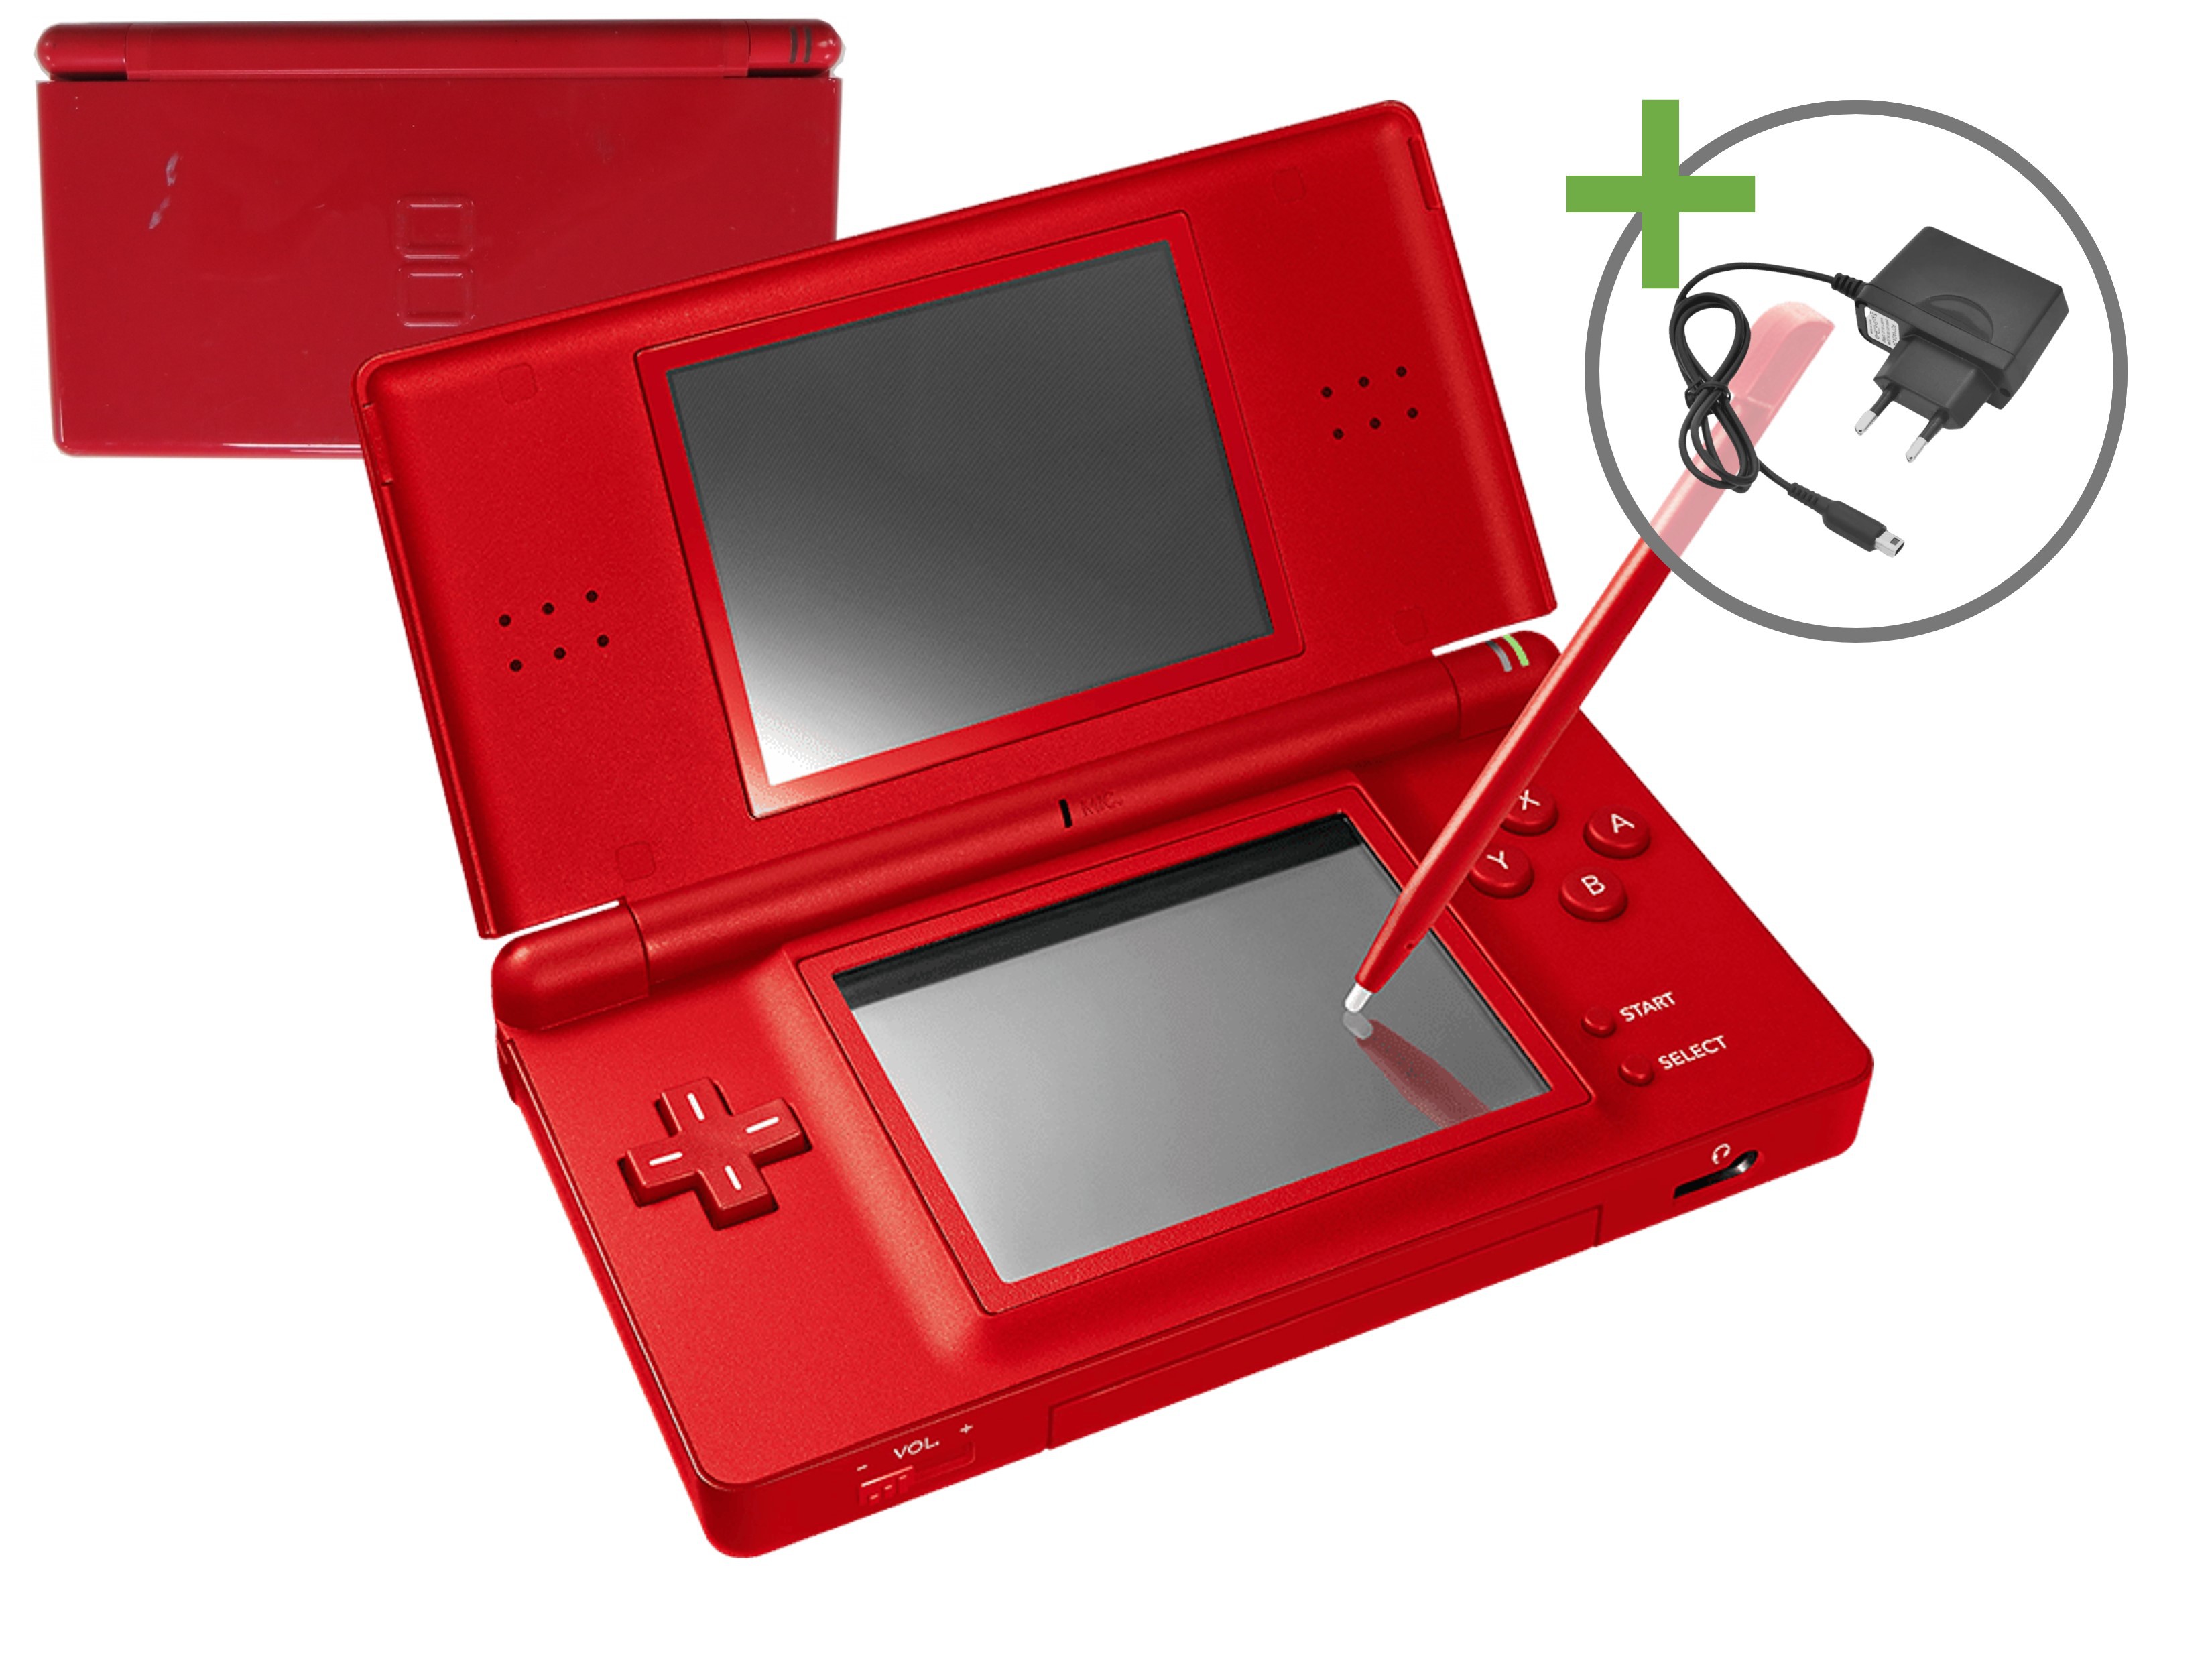 Nintendo DS Lite - Red - Nintendo DS Hardware